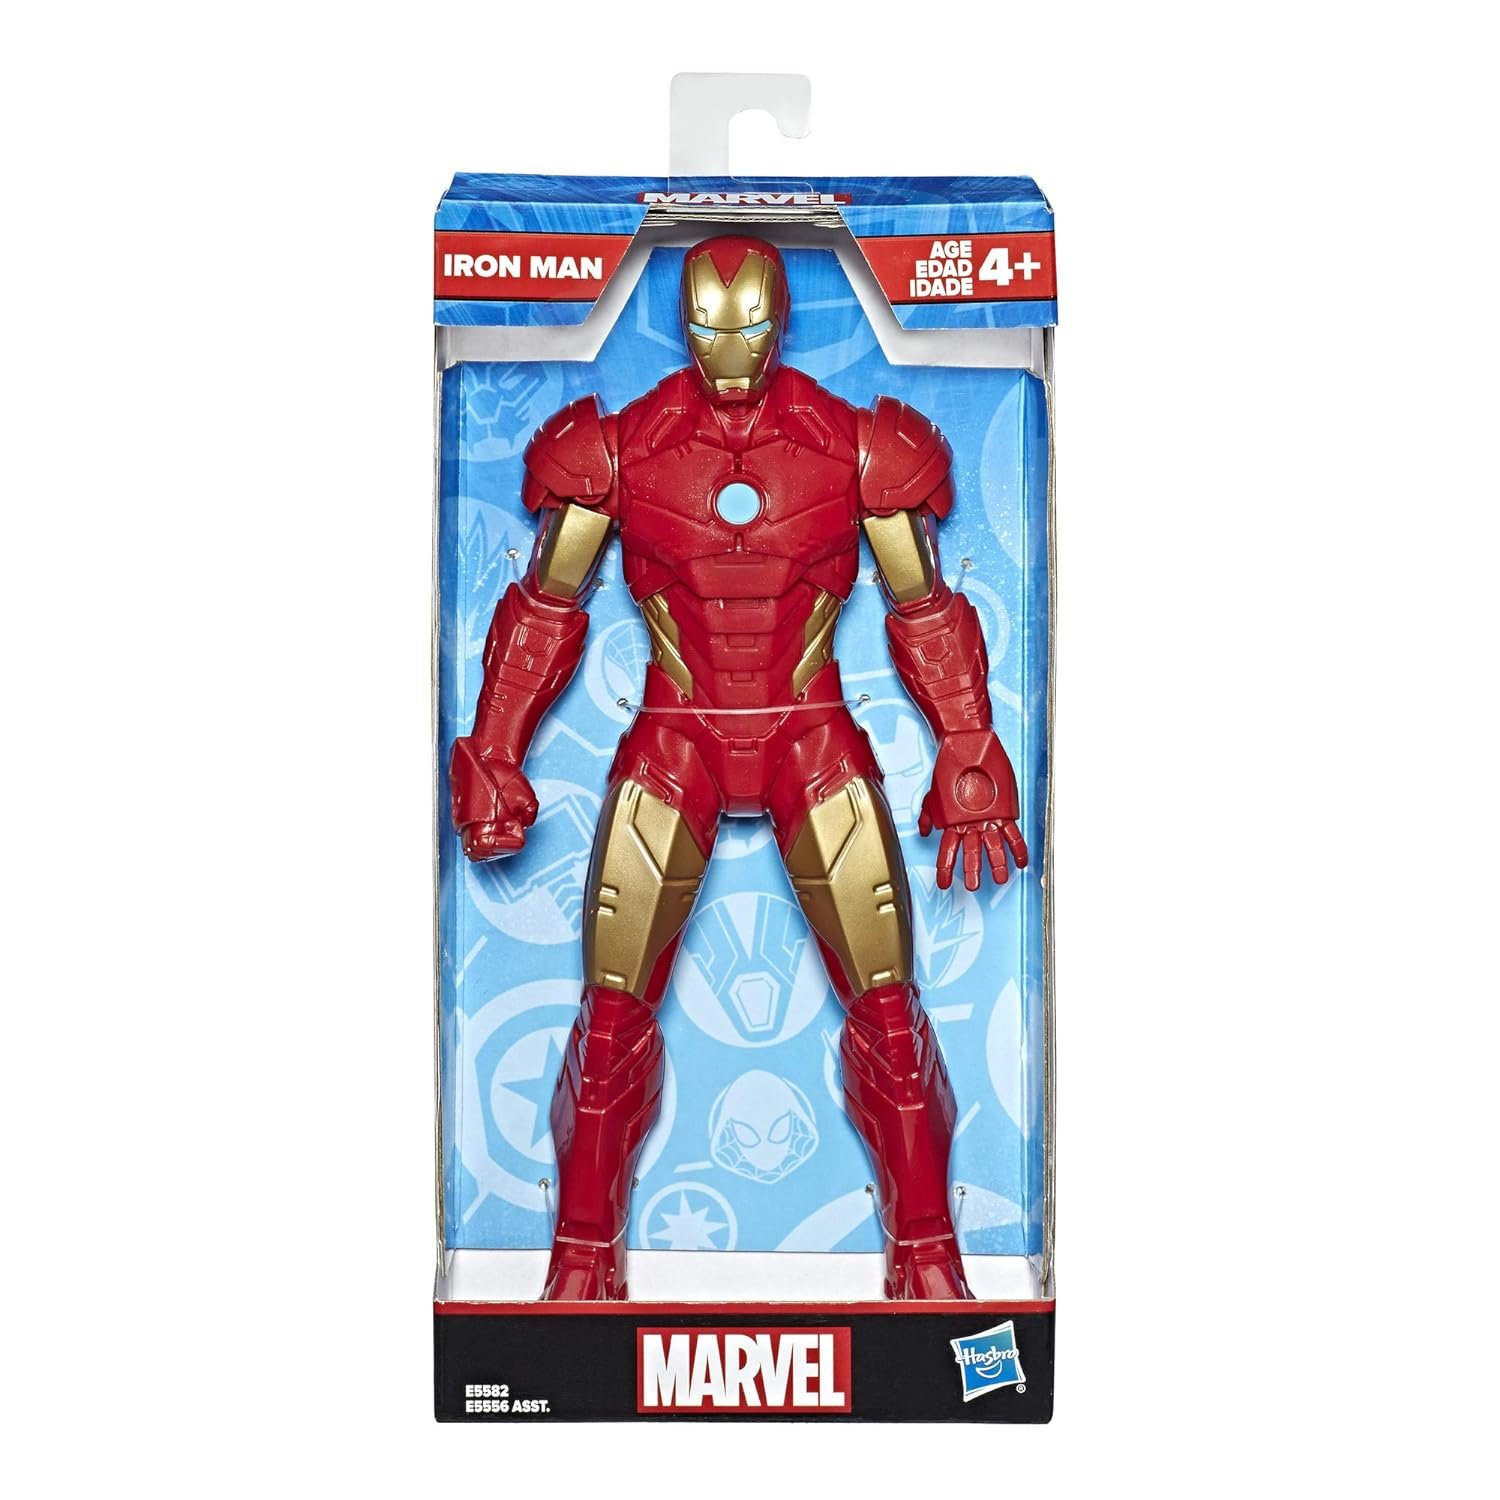 Marvel Iron Man Action Figure image 2